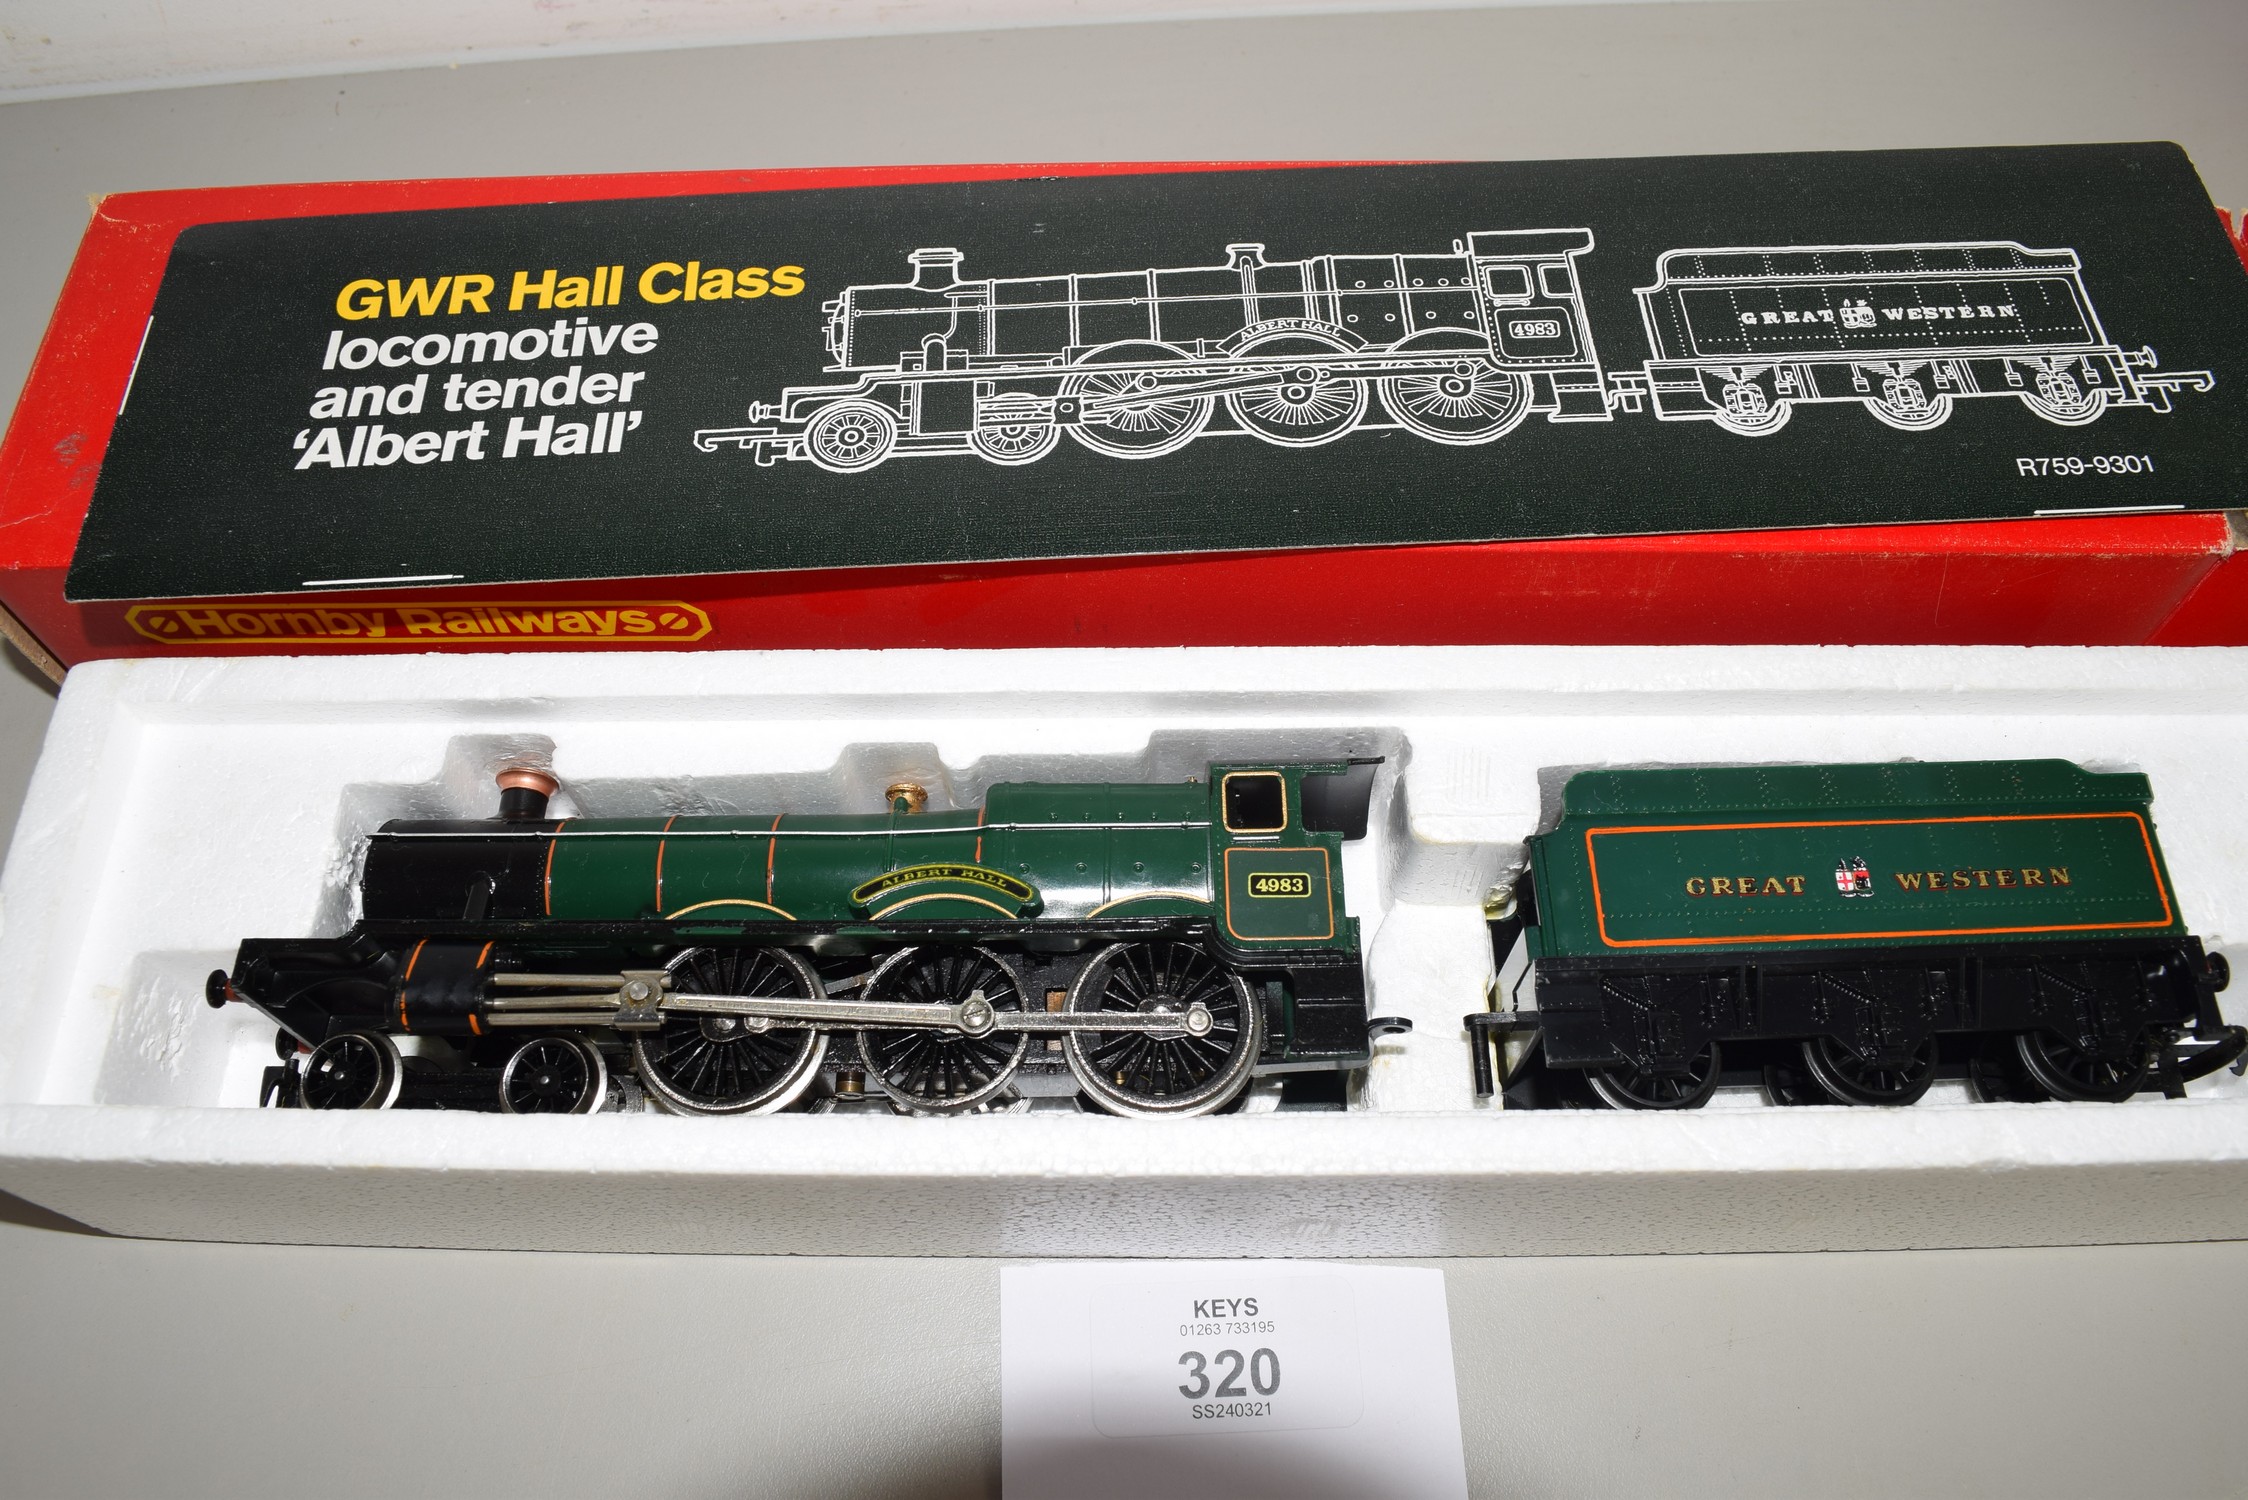 Boxed Hornby 00 gauge R759 GWR "Albert Hall" locomotive No 4983